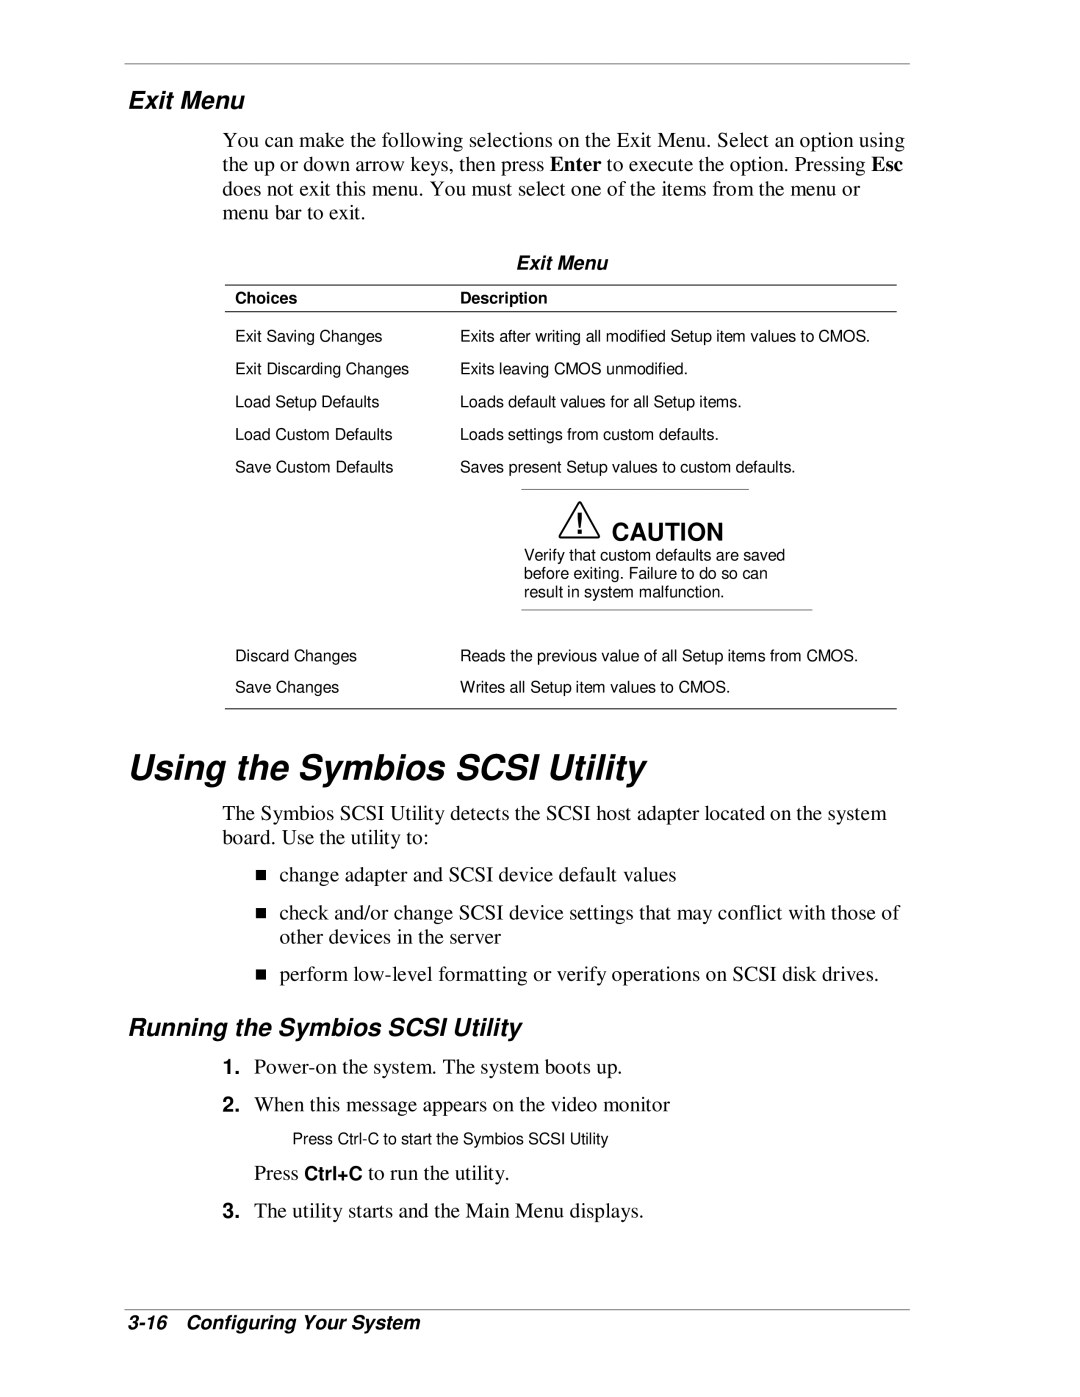 NEC MH4500 manual Using the Symbios SCSI Utility, Exit Menu, Running the Symbios SCSI Utility 